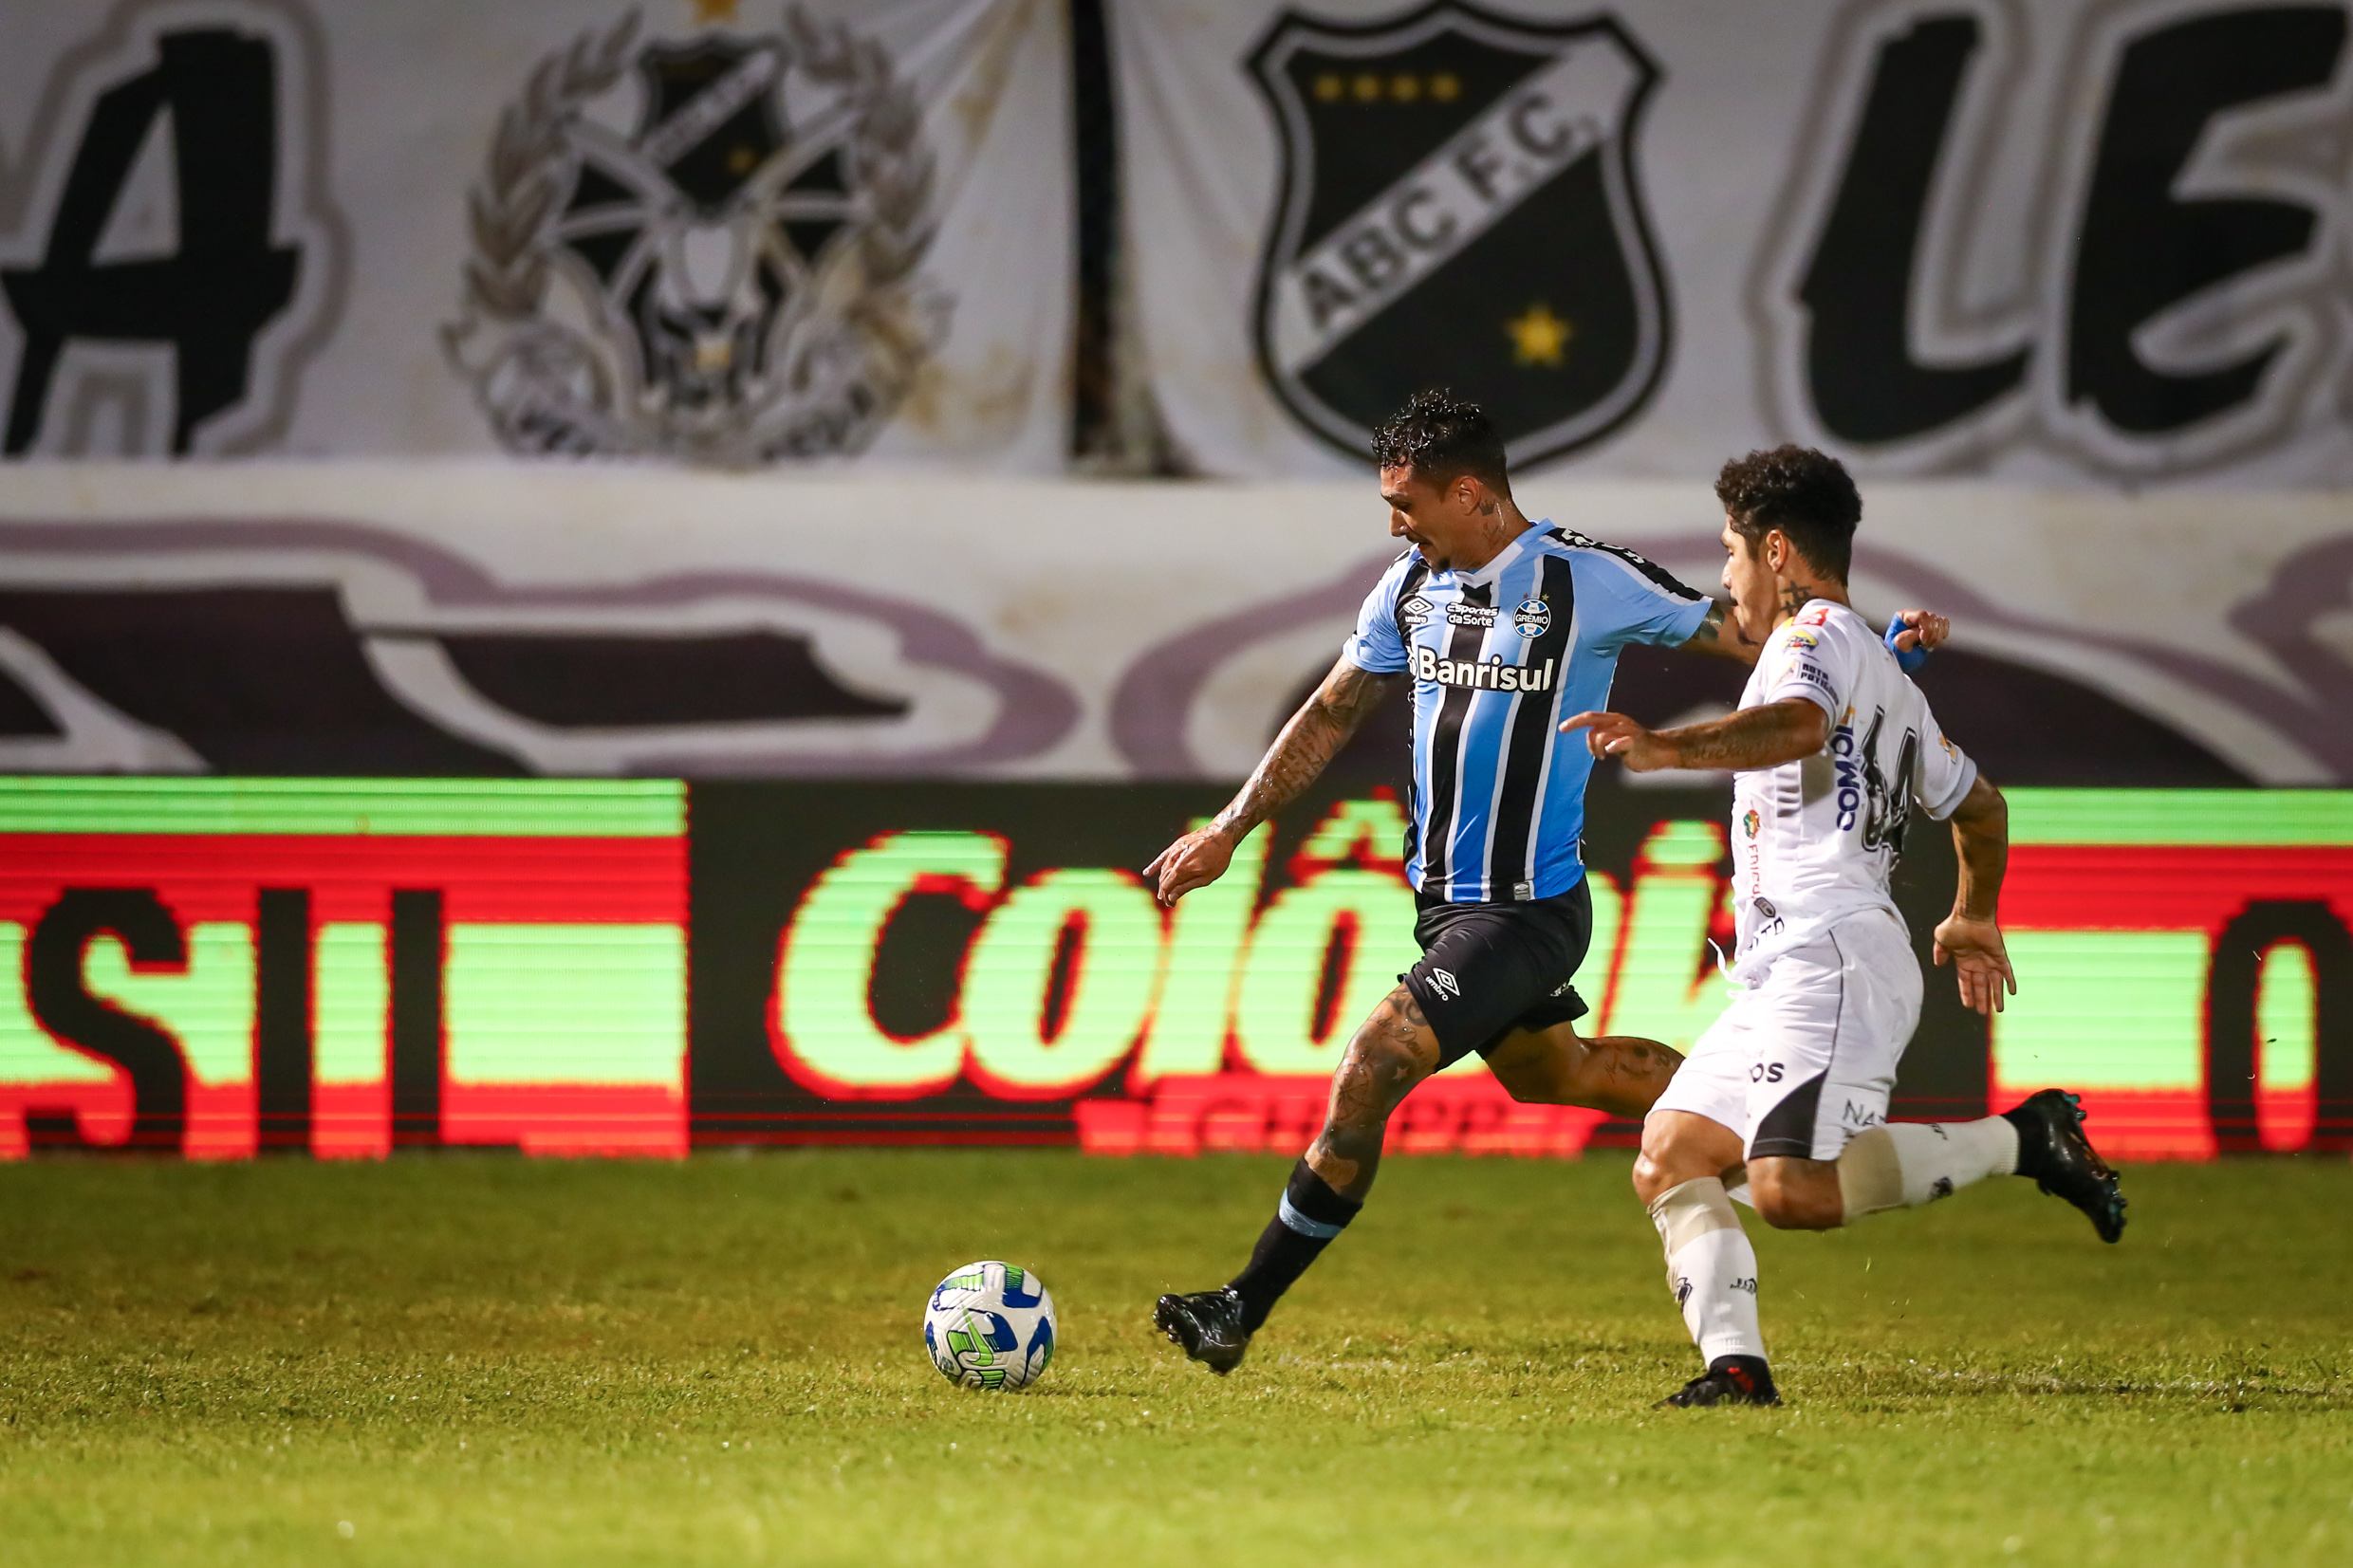 Grêmio vs ABC: Experience meets Determination